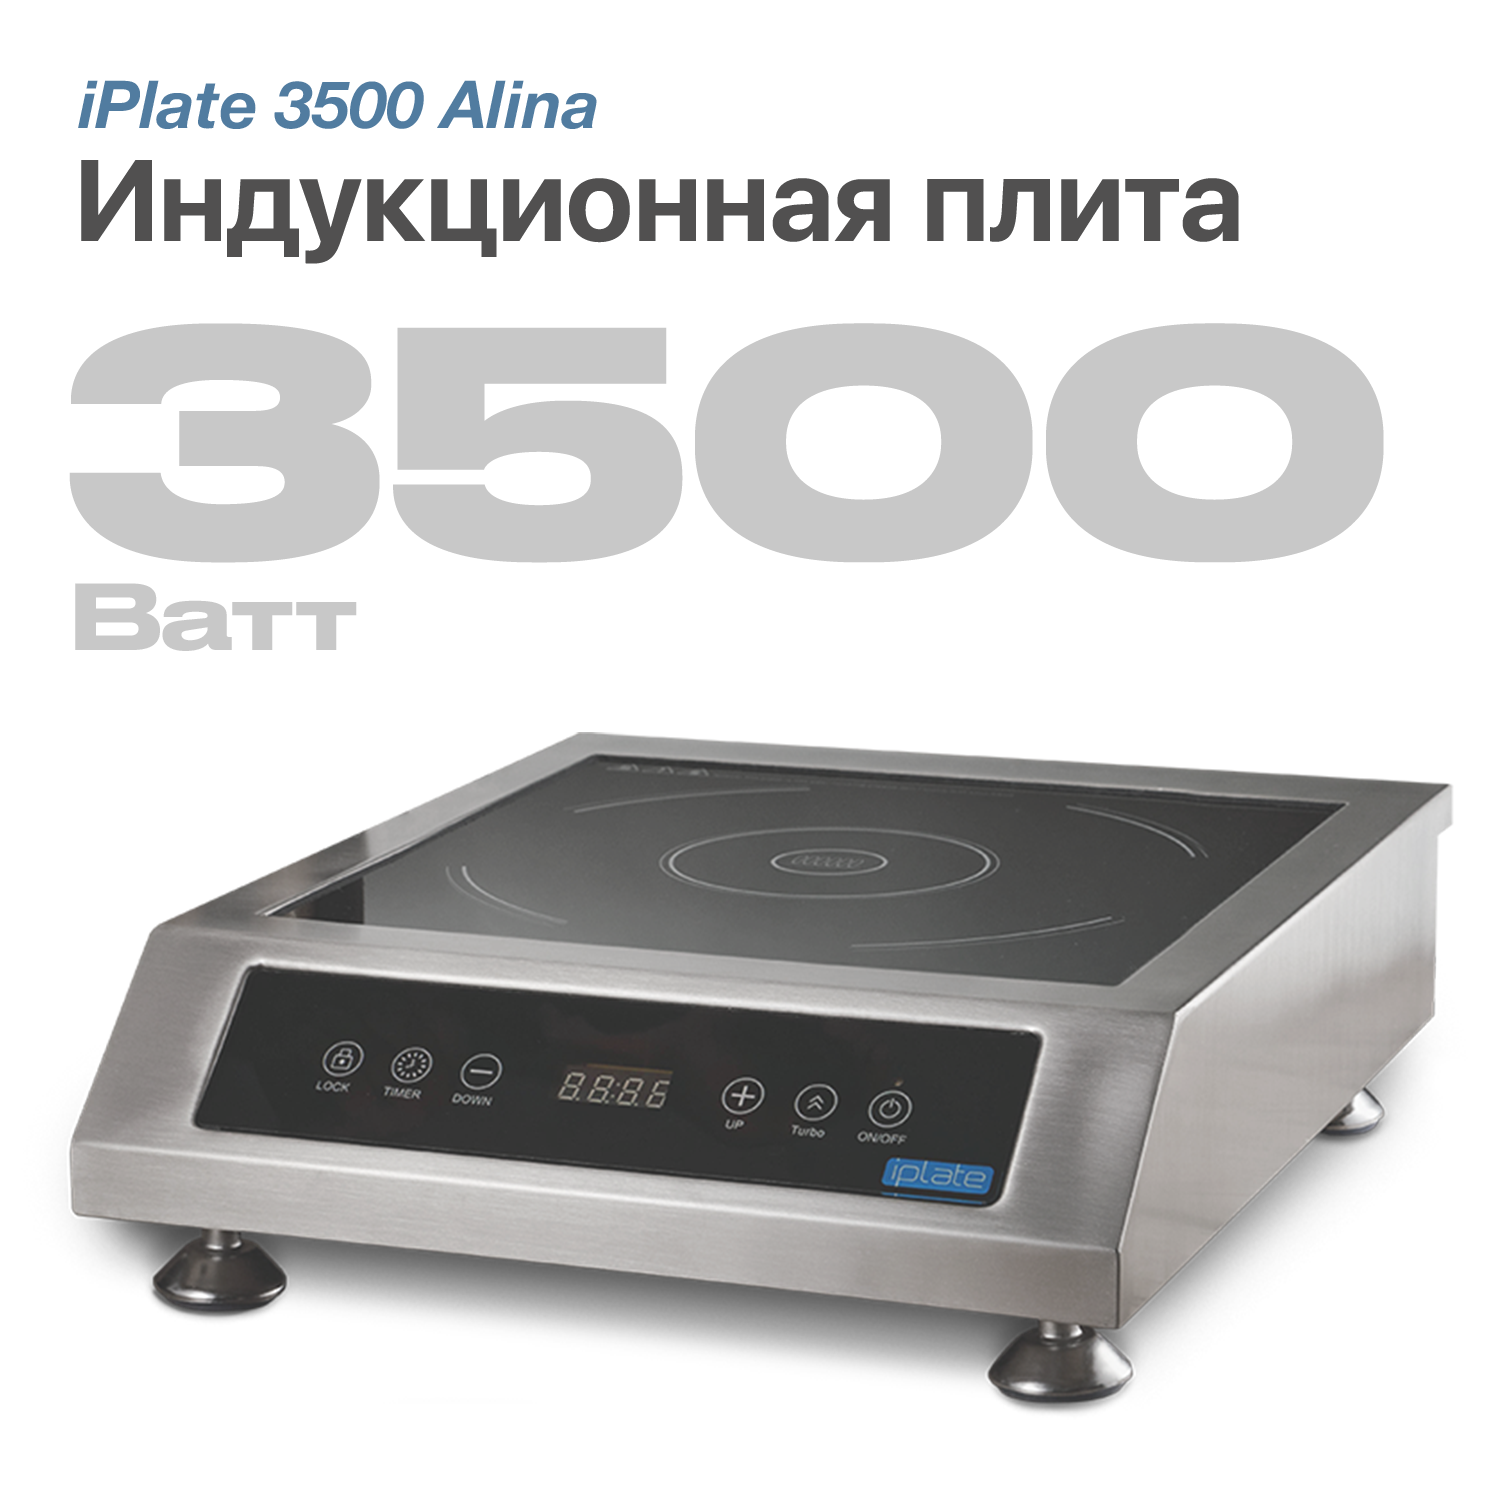 Индукционная плита iPlate 3500 ALINA, 3500 Вт